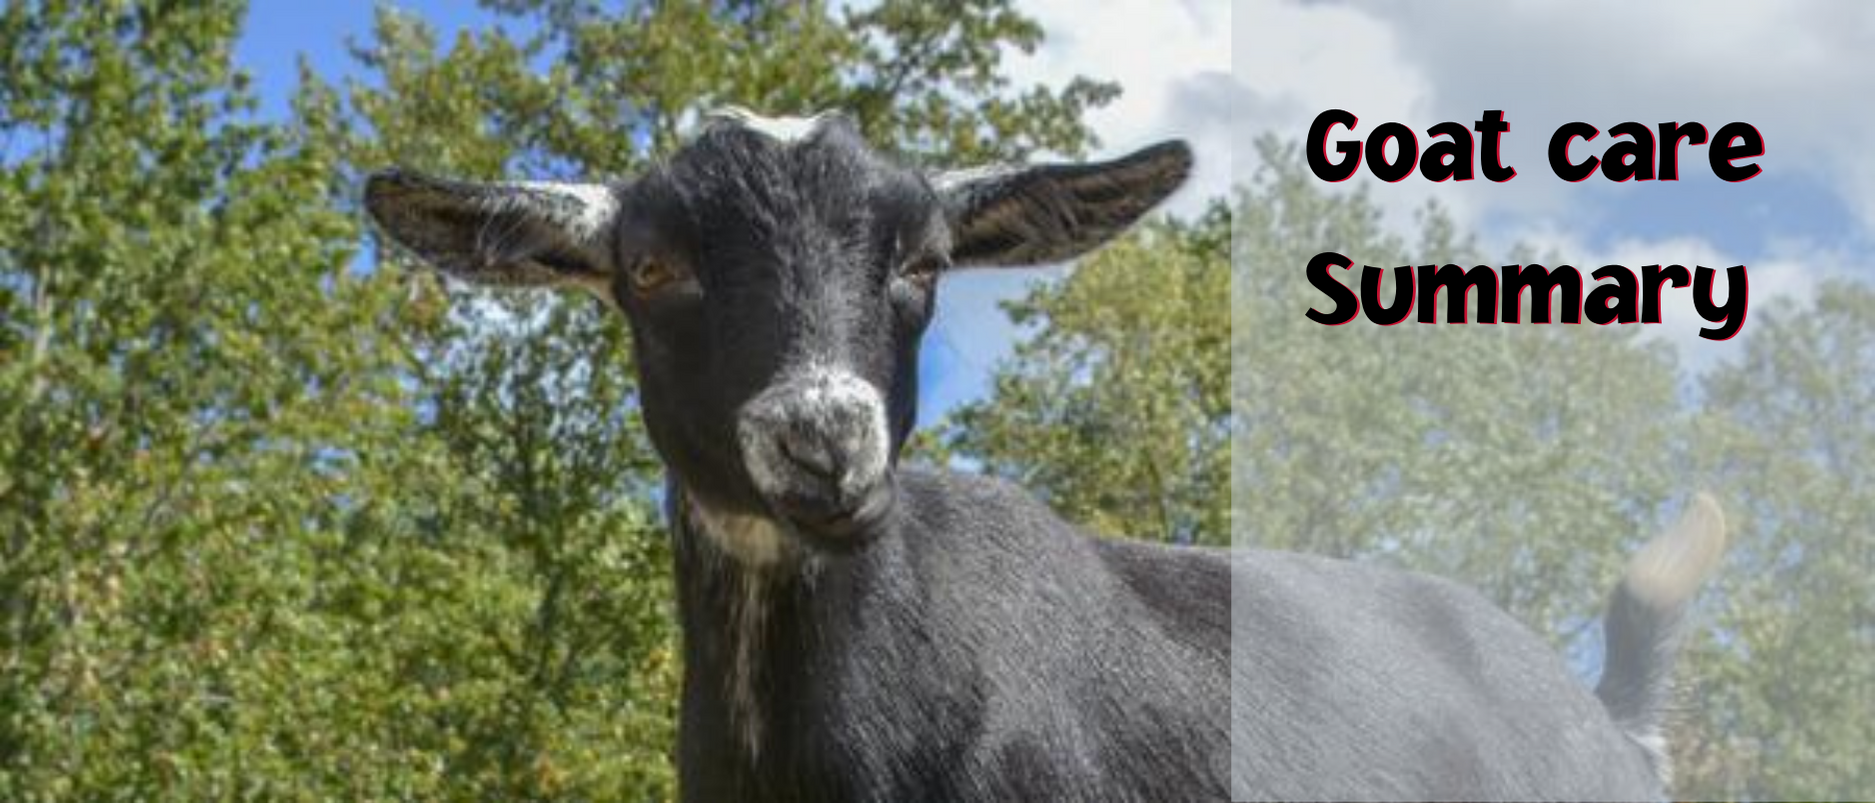 Goat care summary